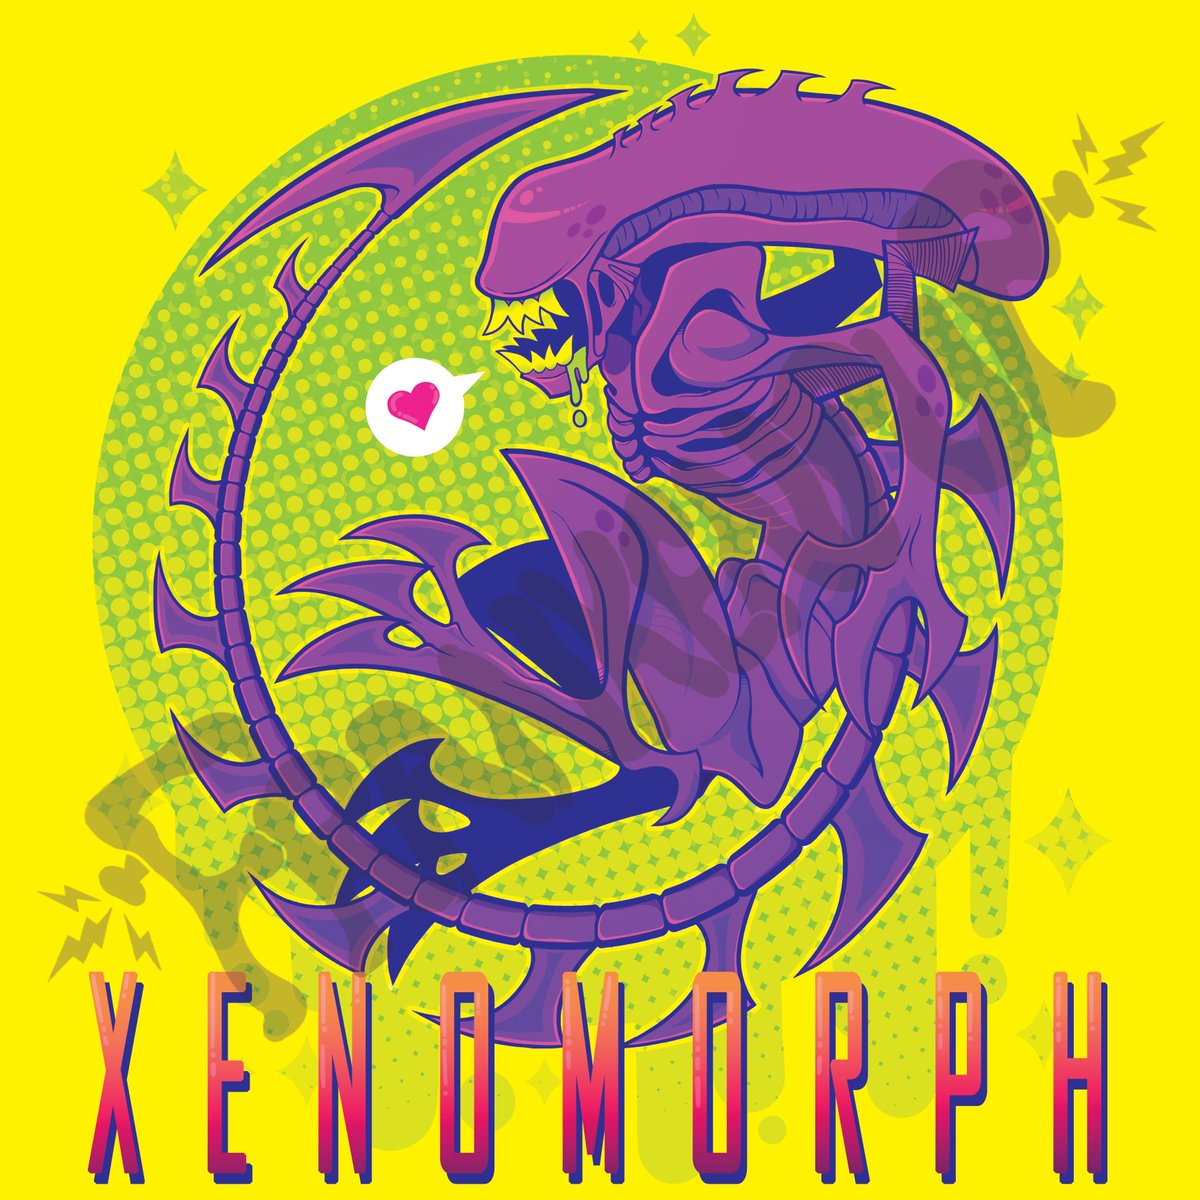 Mum asked if I could draw a Xenomorph. OF COURSE I CAN, QUEEN.
~
#aliens #alien #xenomorph #cute #kawaii #horror #horroricon #creepy #smallbusiness #shopsmall #stickers
#prints #xenomorphart #fanart #ripley